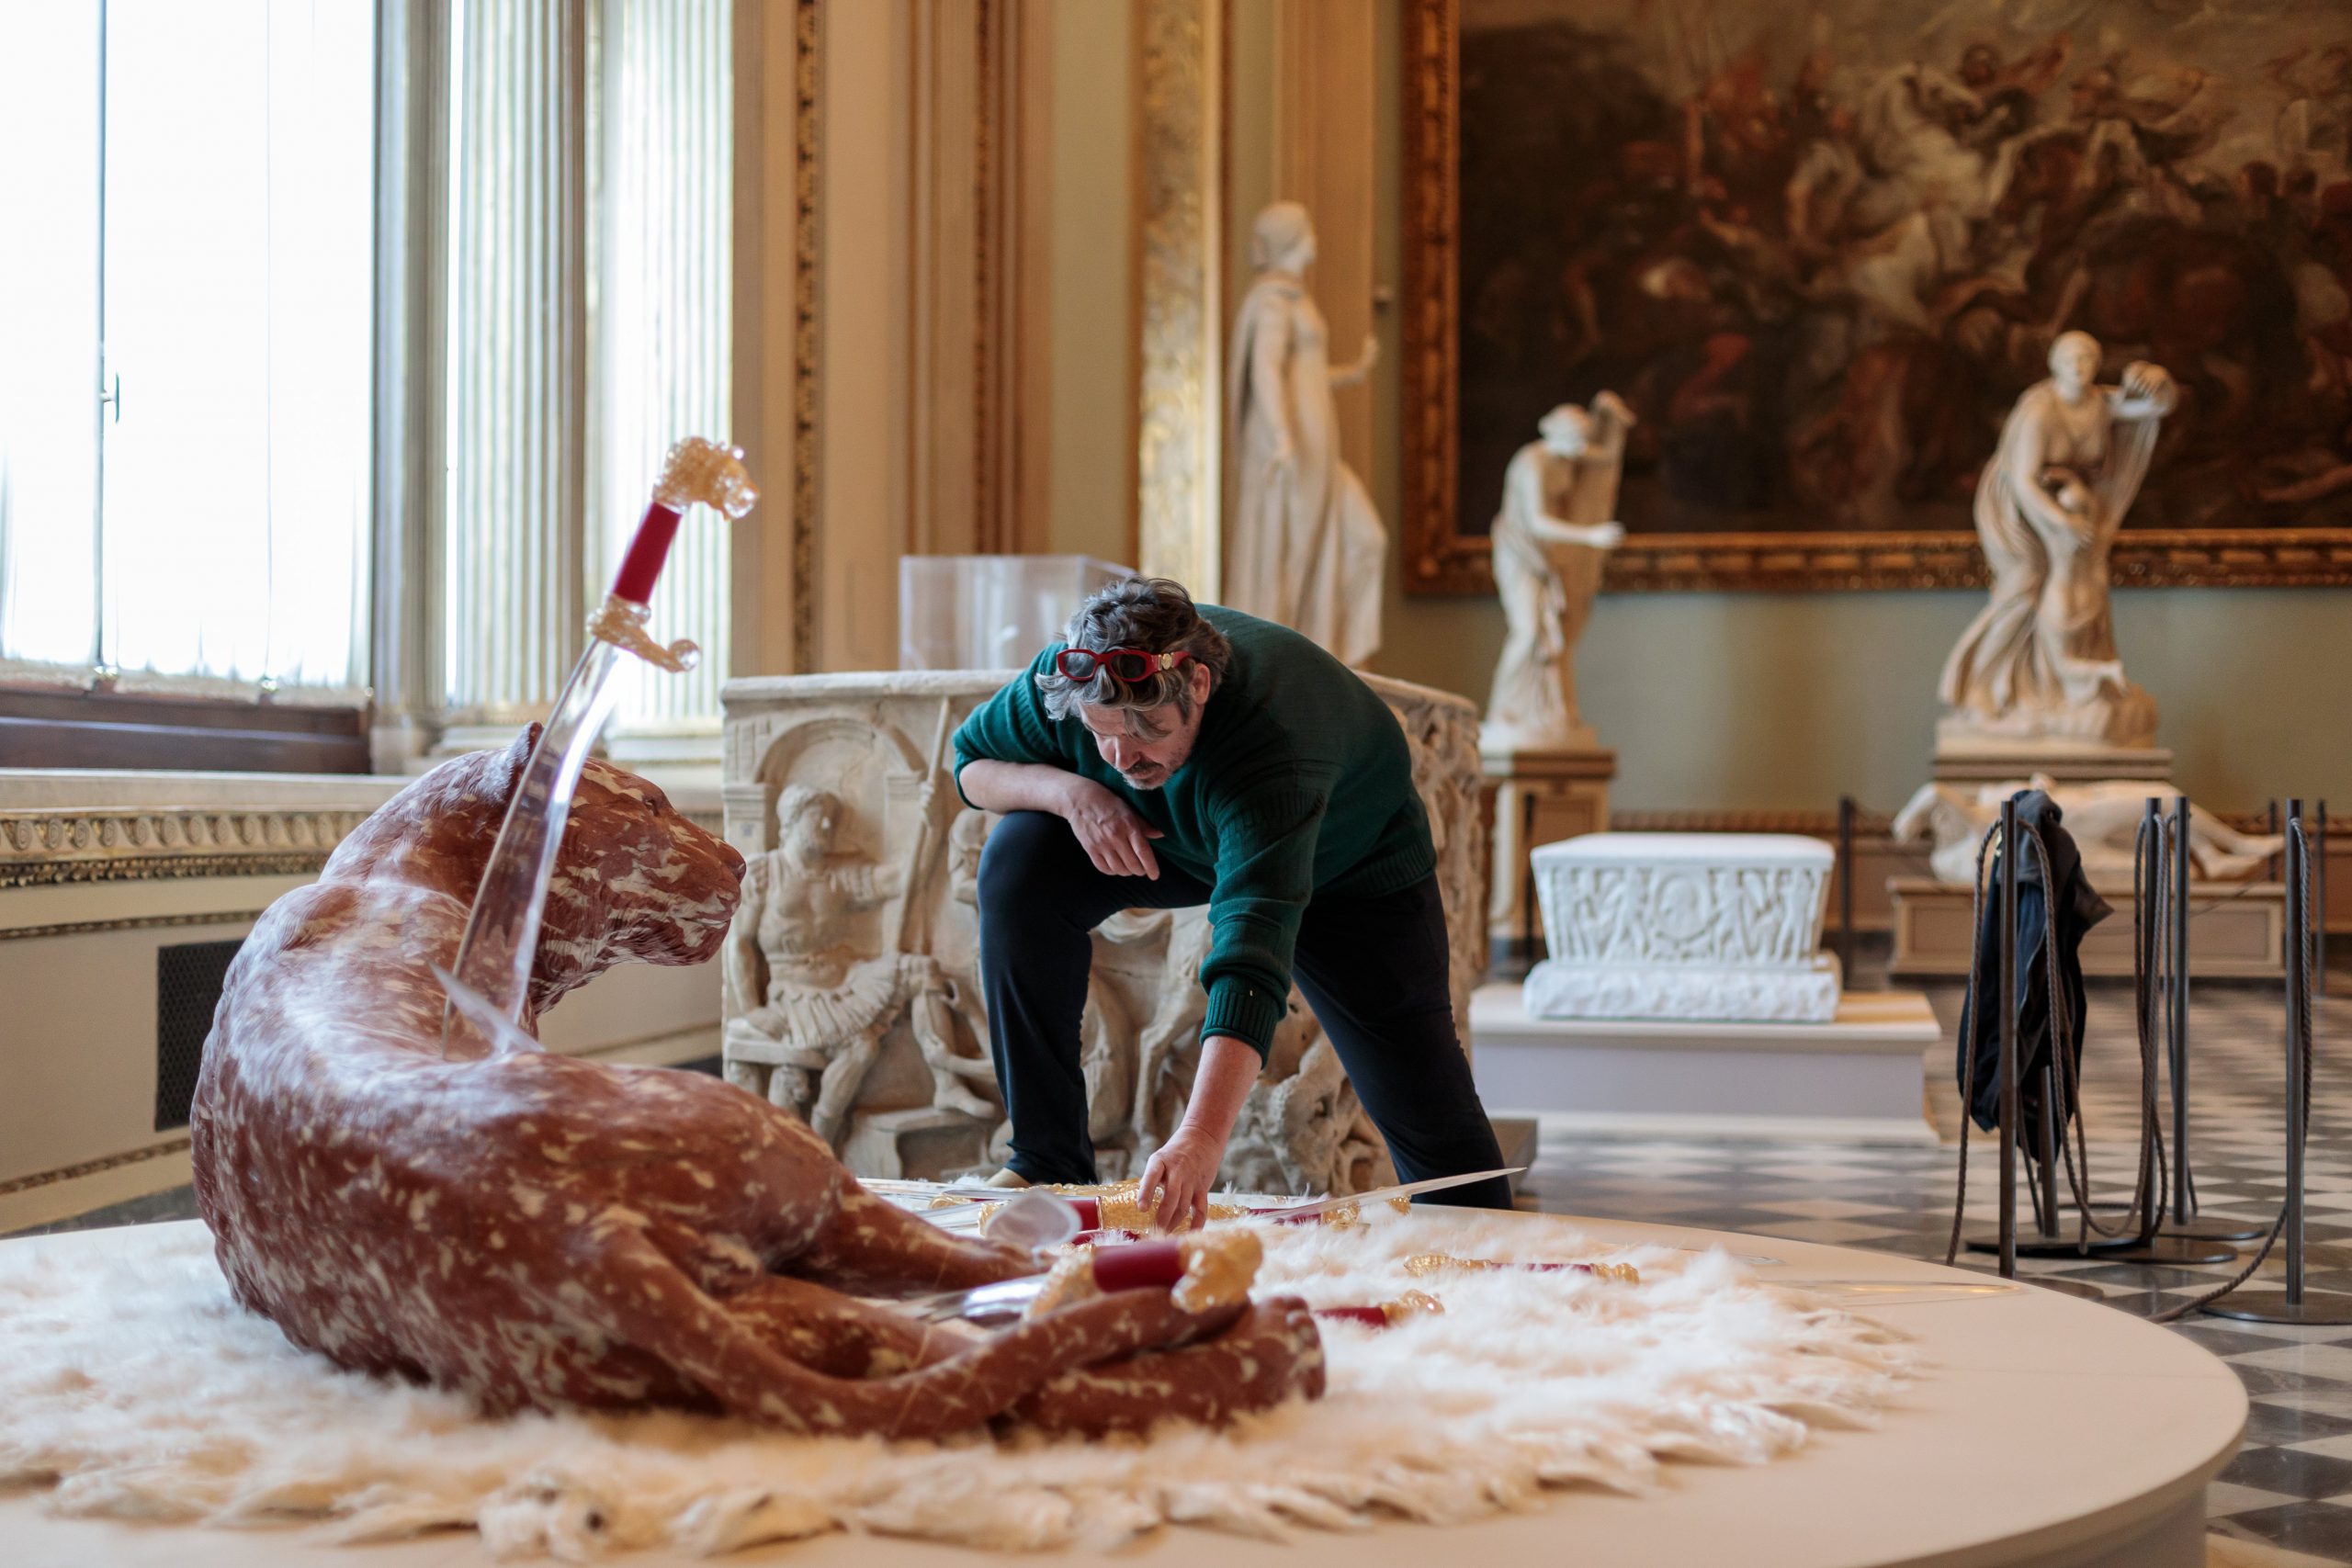 Koen Vanmechelen installing Domestic Violence at the Uffizi Gallery